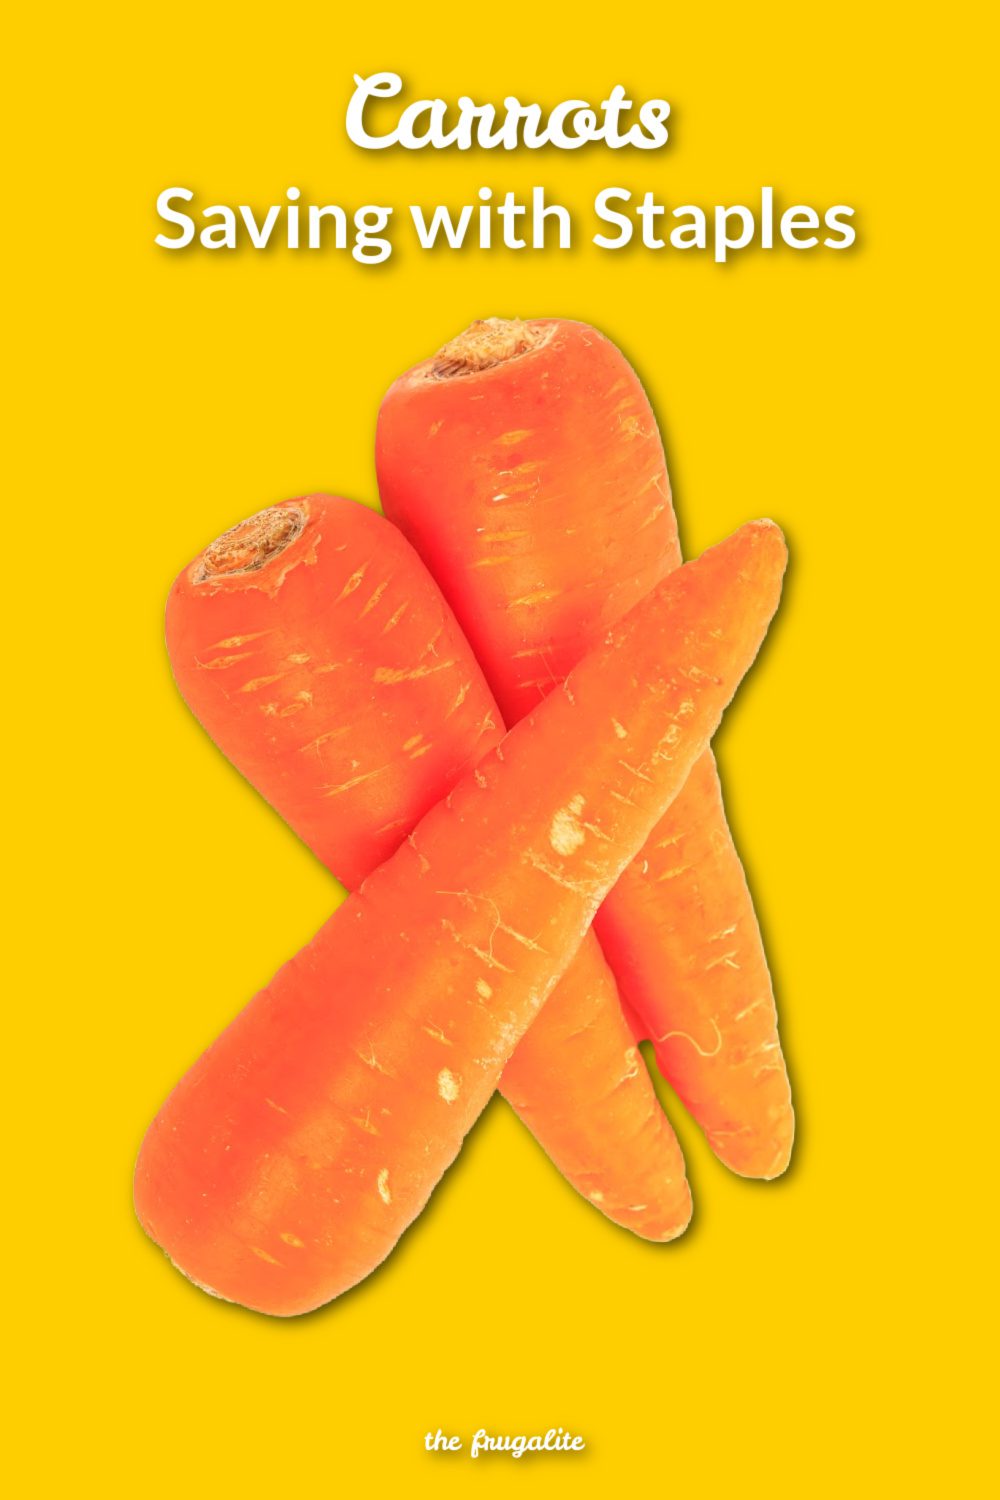 Carrots: Saving Money with Staples